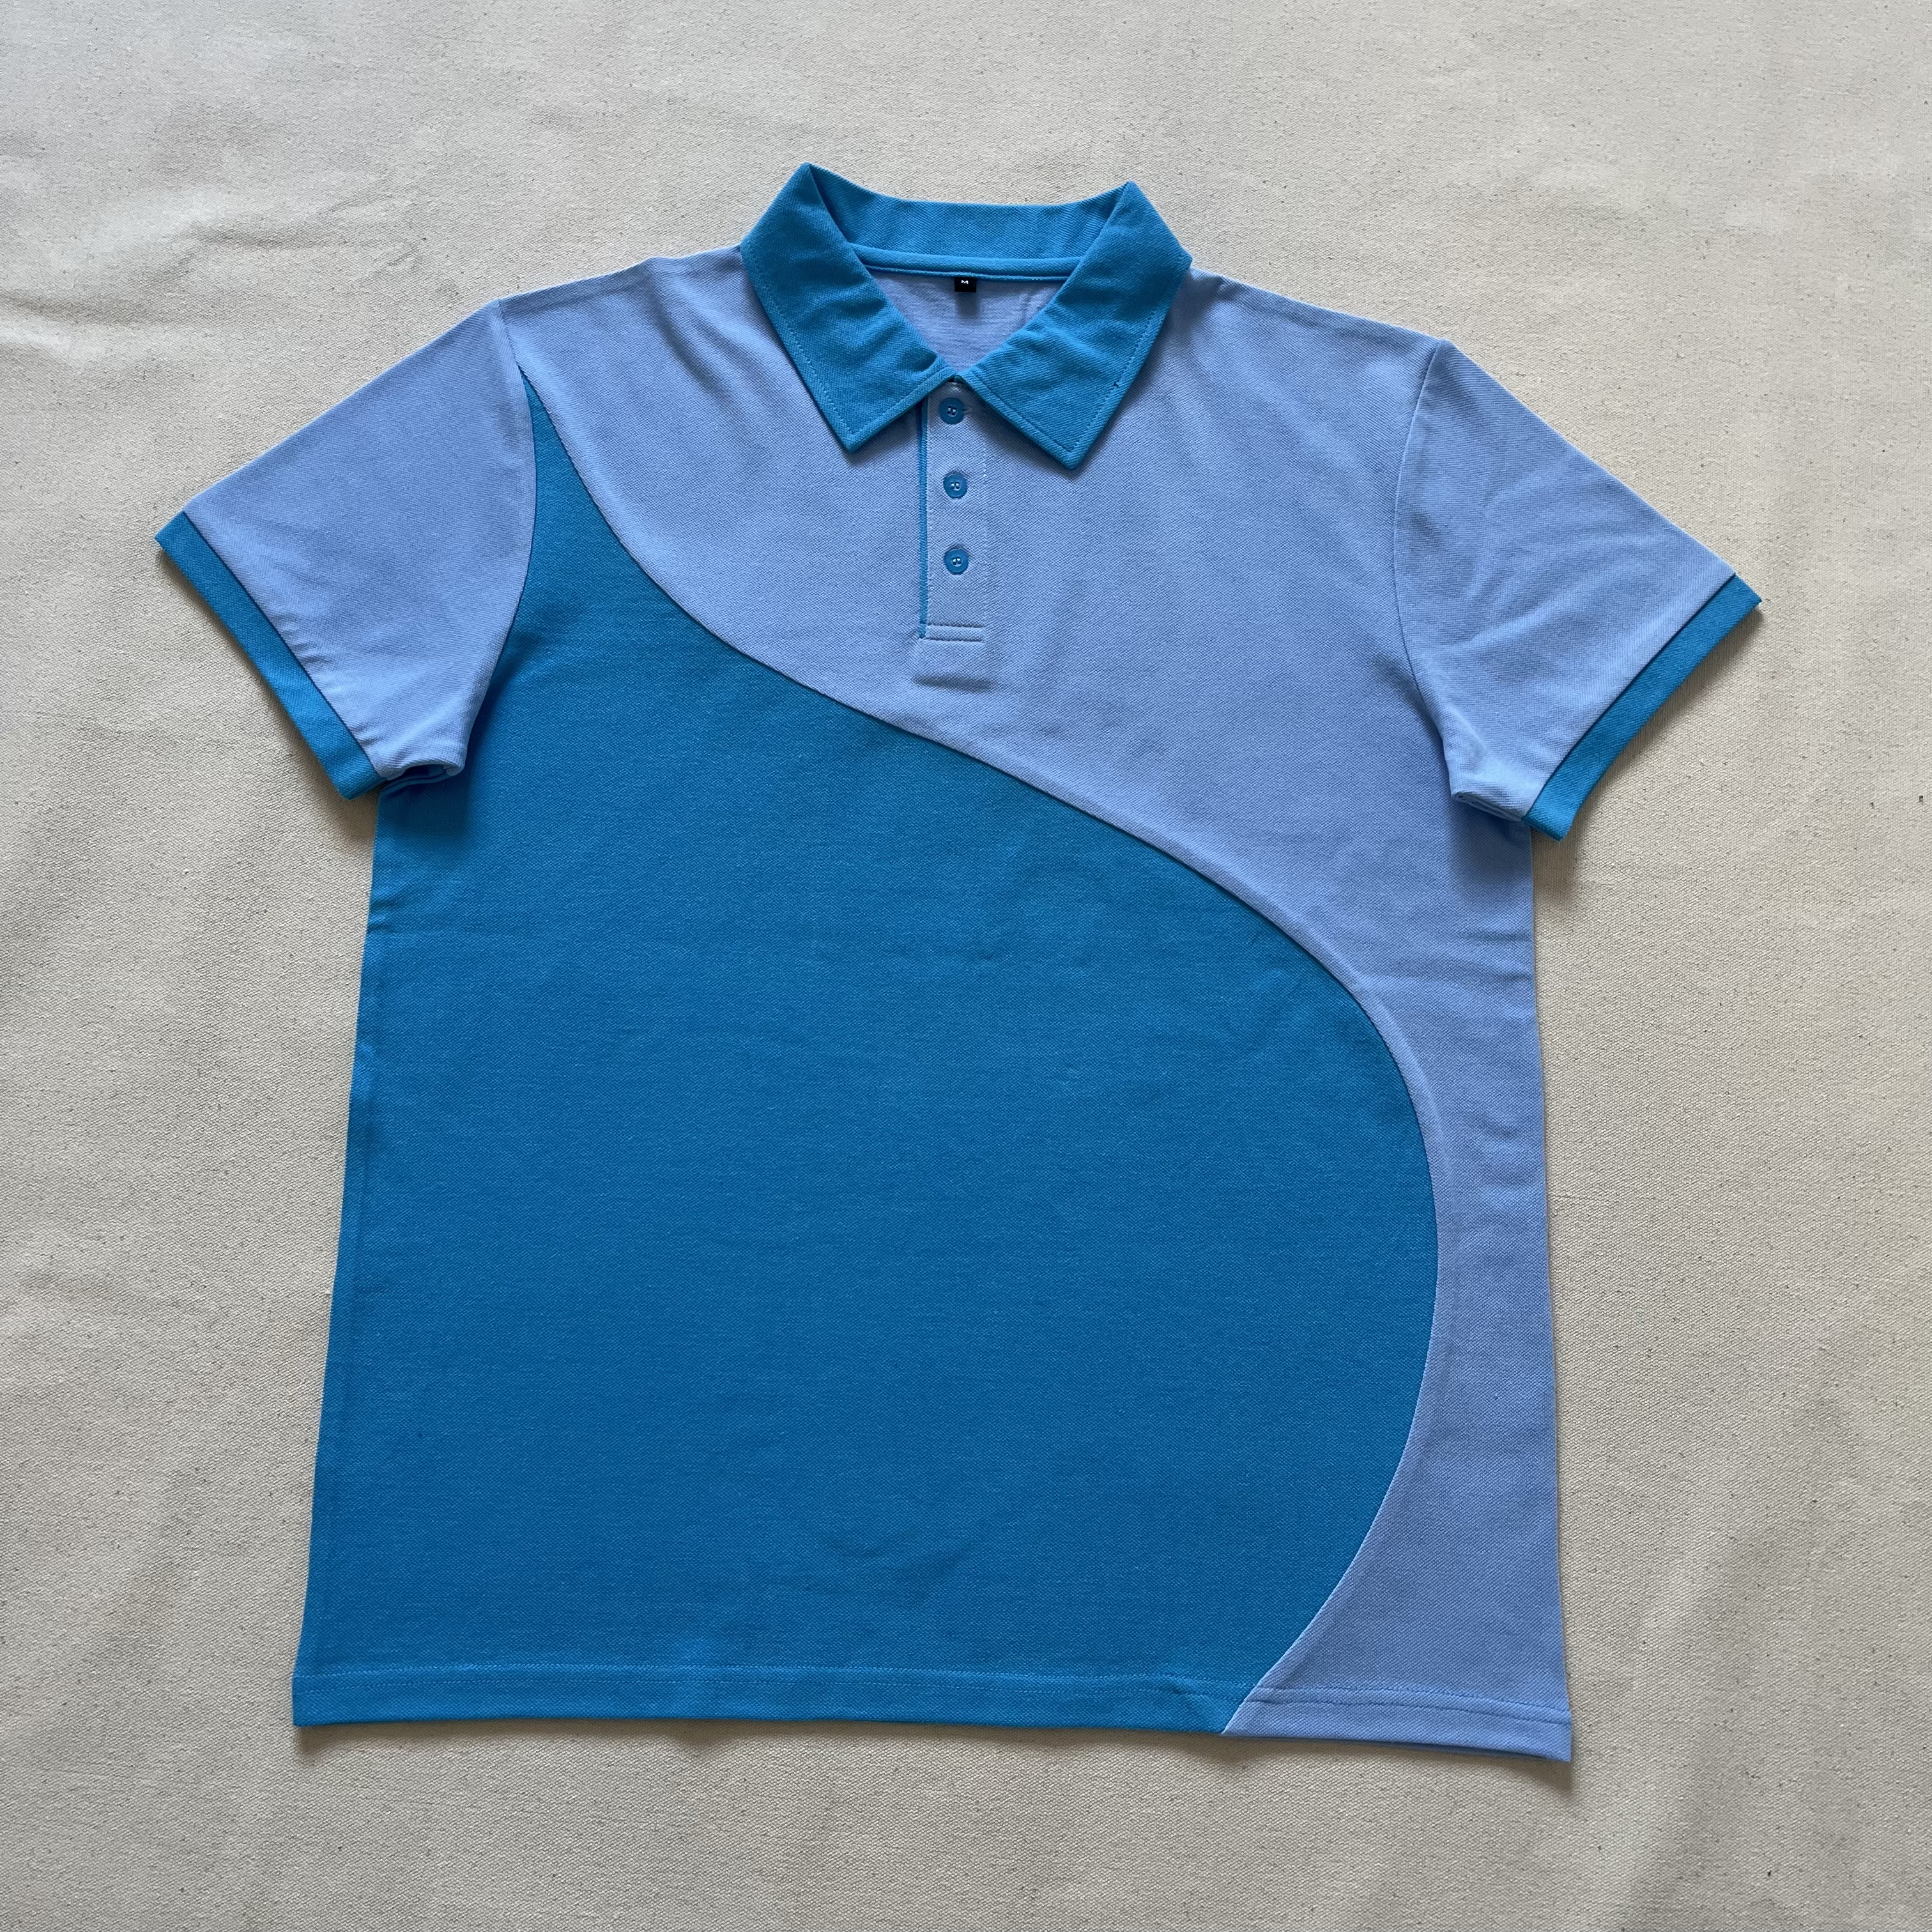 Customized Workwear Polo Shirt Featured Image